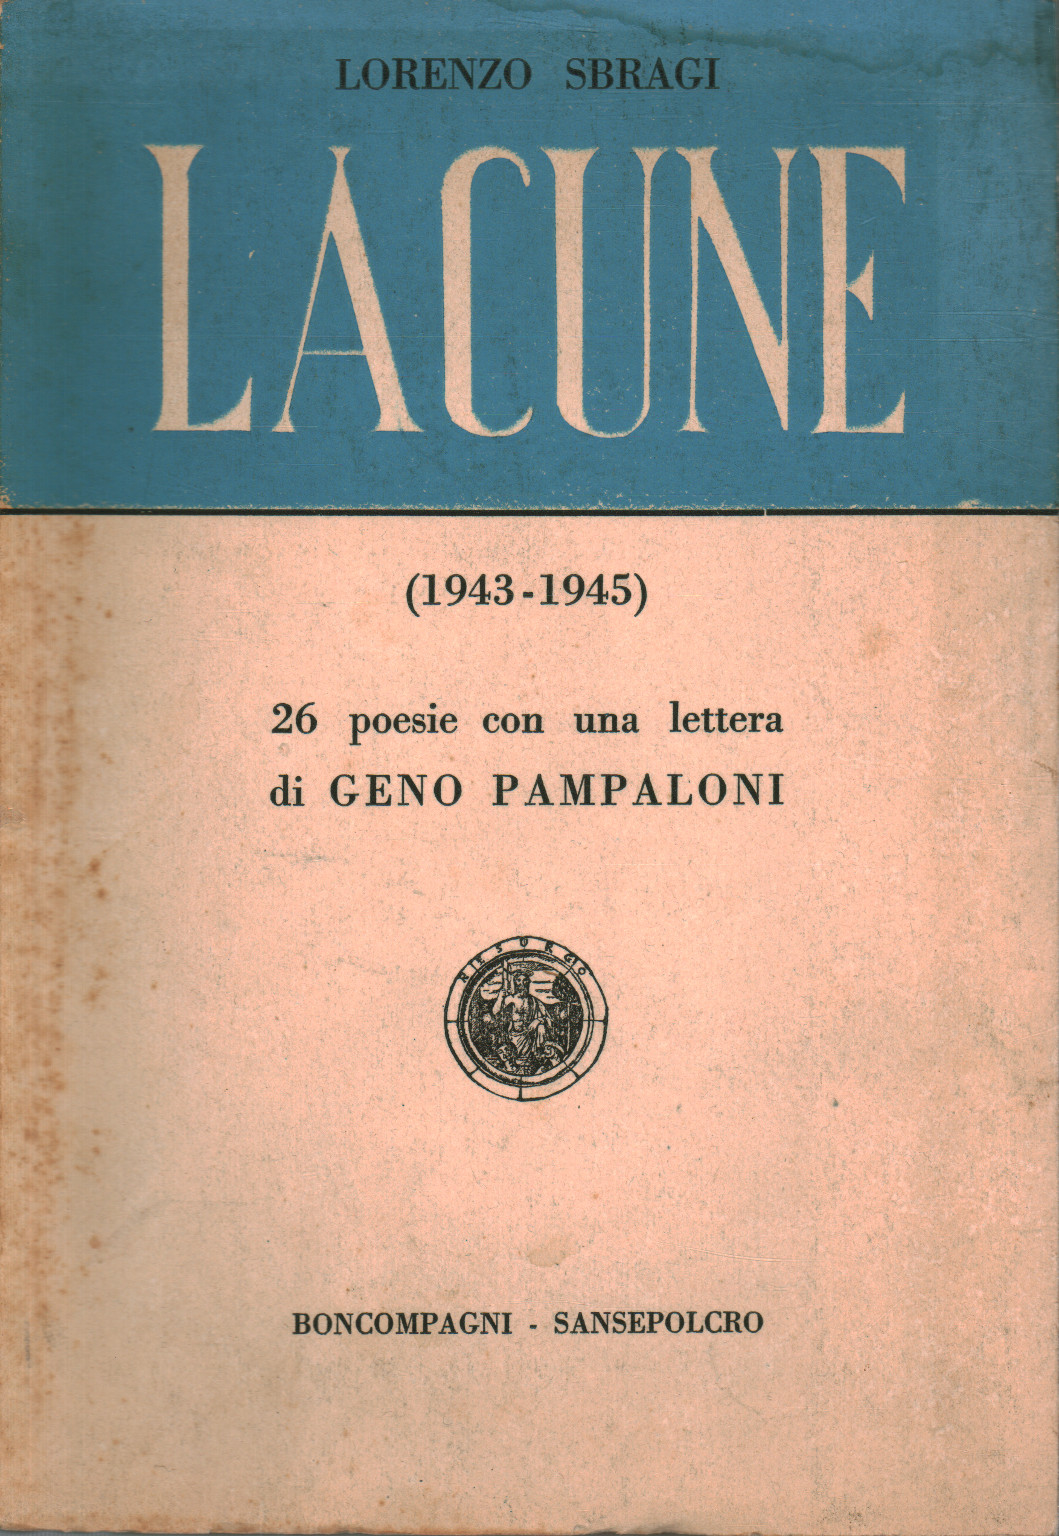 Lacune (1943-1945), Lorenzo Sbragi